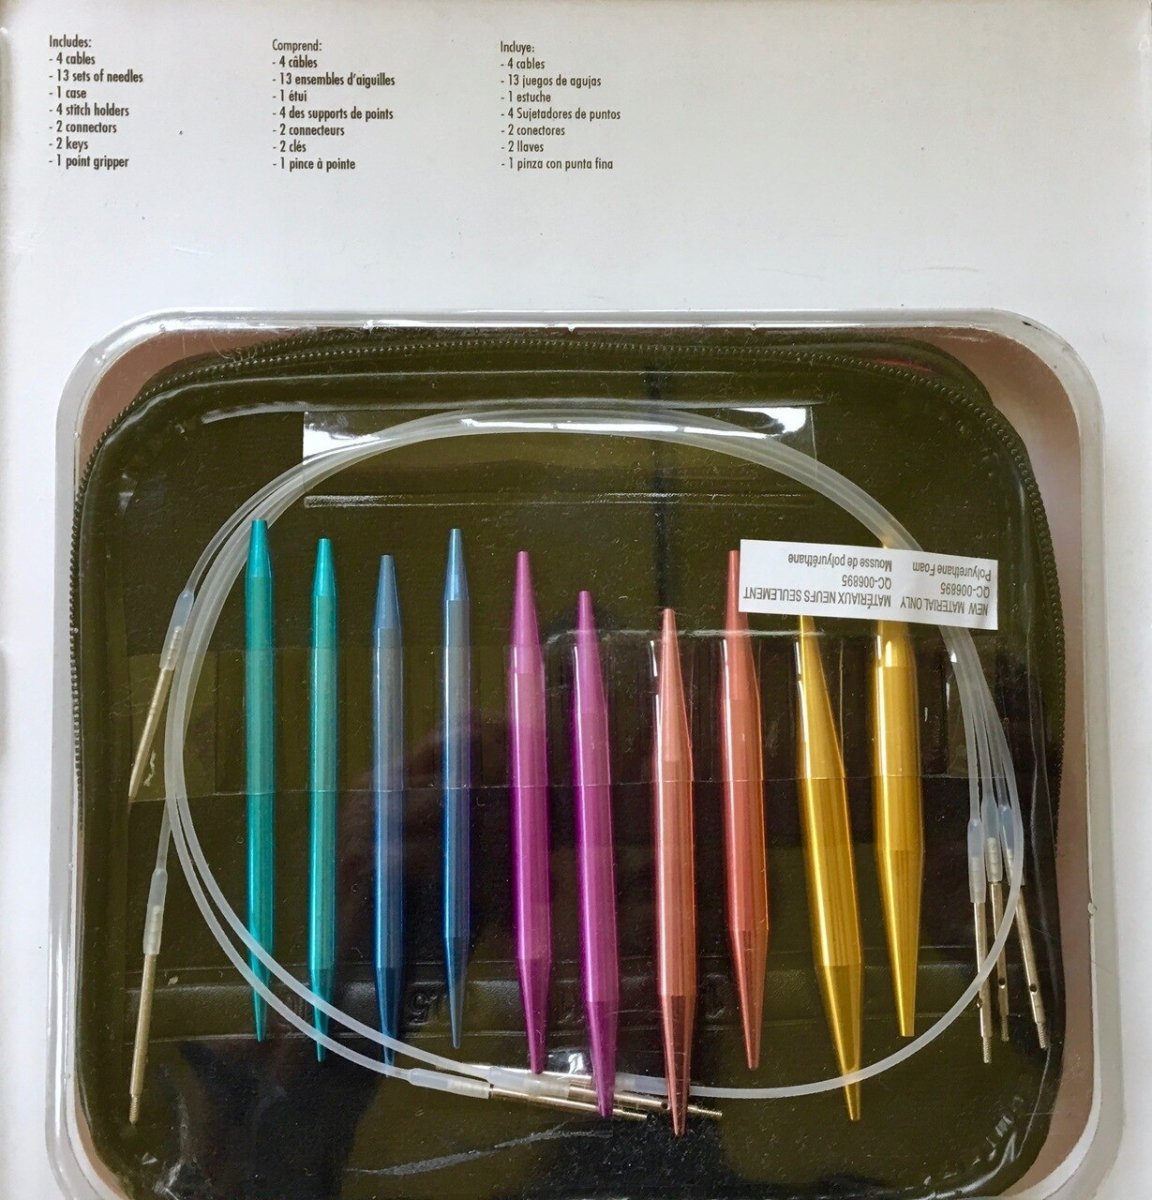  Knitting Needle Set, 55 Pcs 2.5mm-6.0mm Aluminum